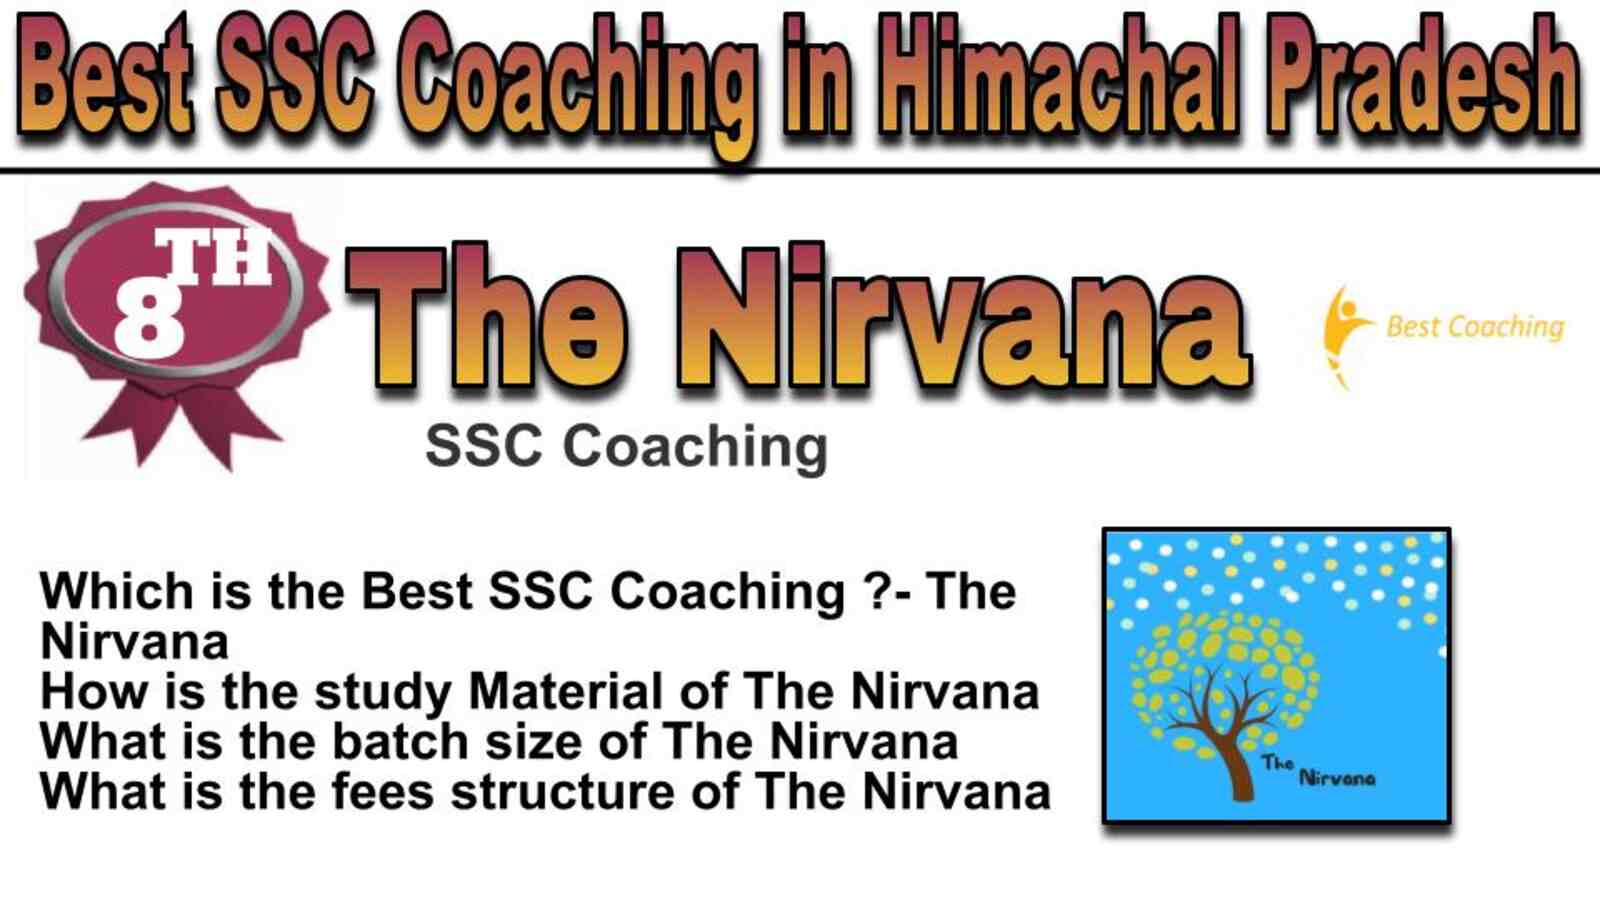 Rank 8 best SSC coaching in Himachal Pradesh